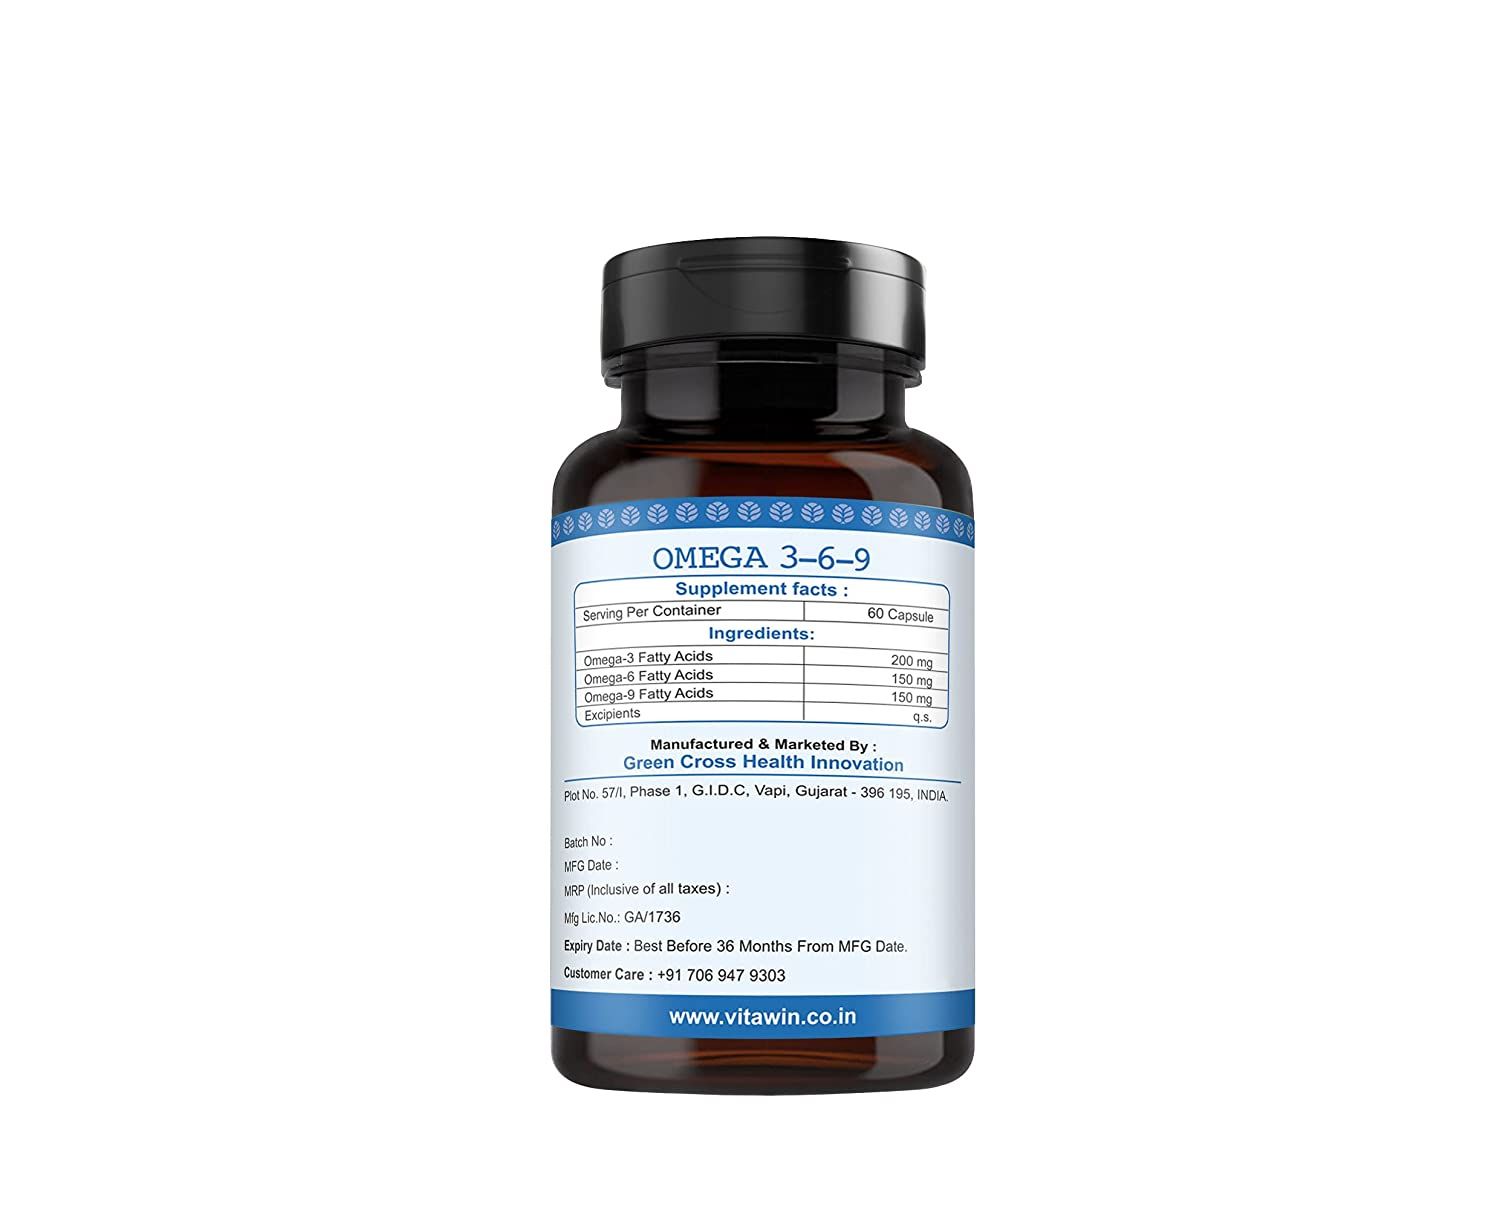 Vitawin Omega 3-6-9 Capsules Image